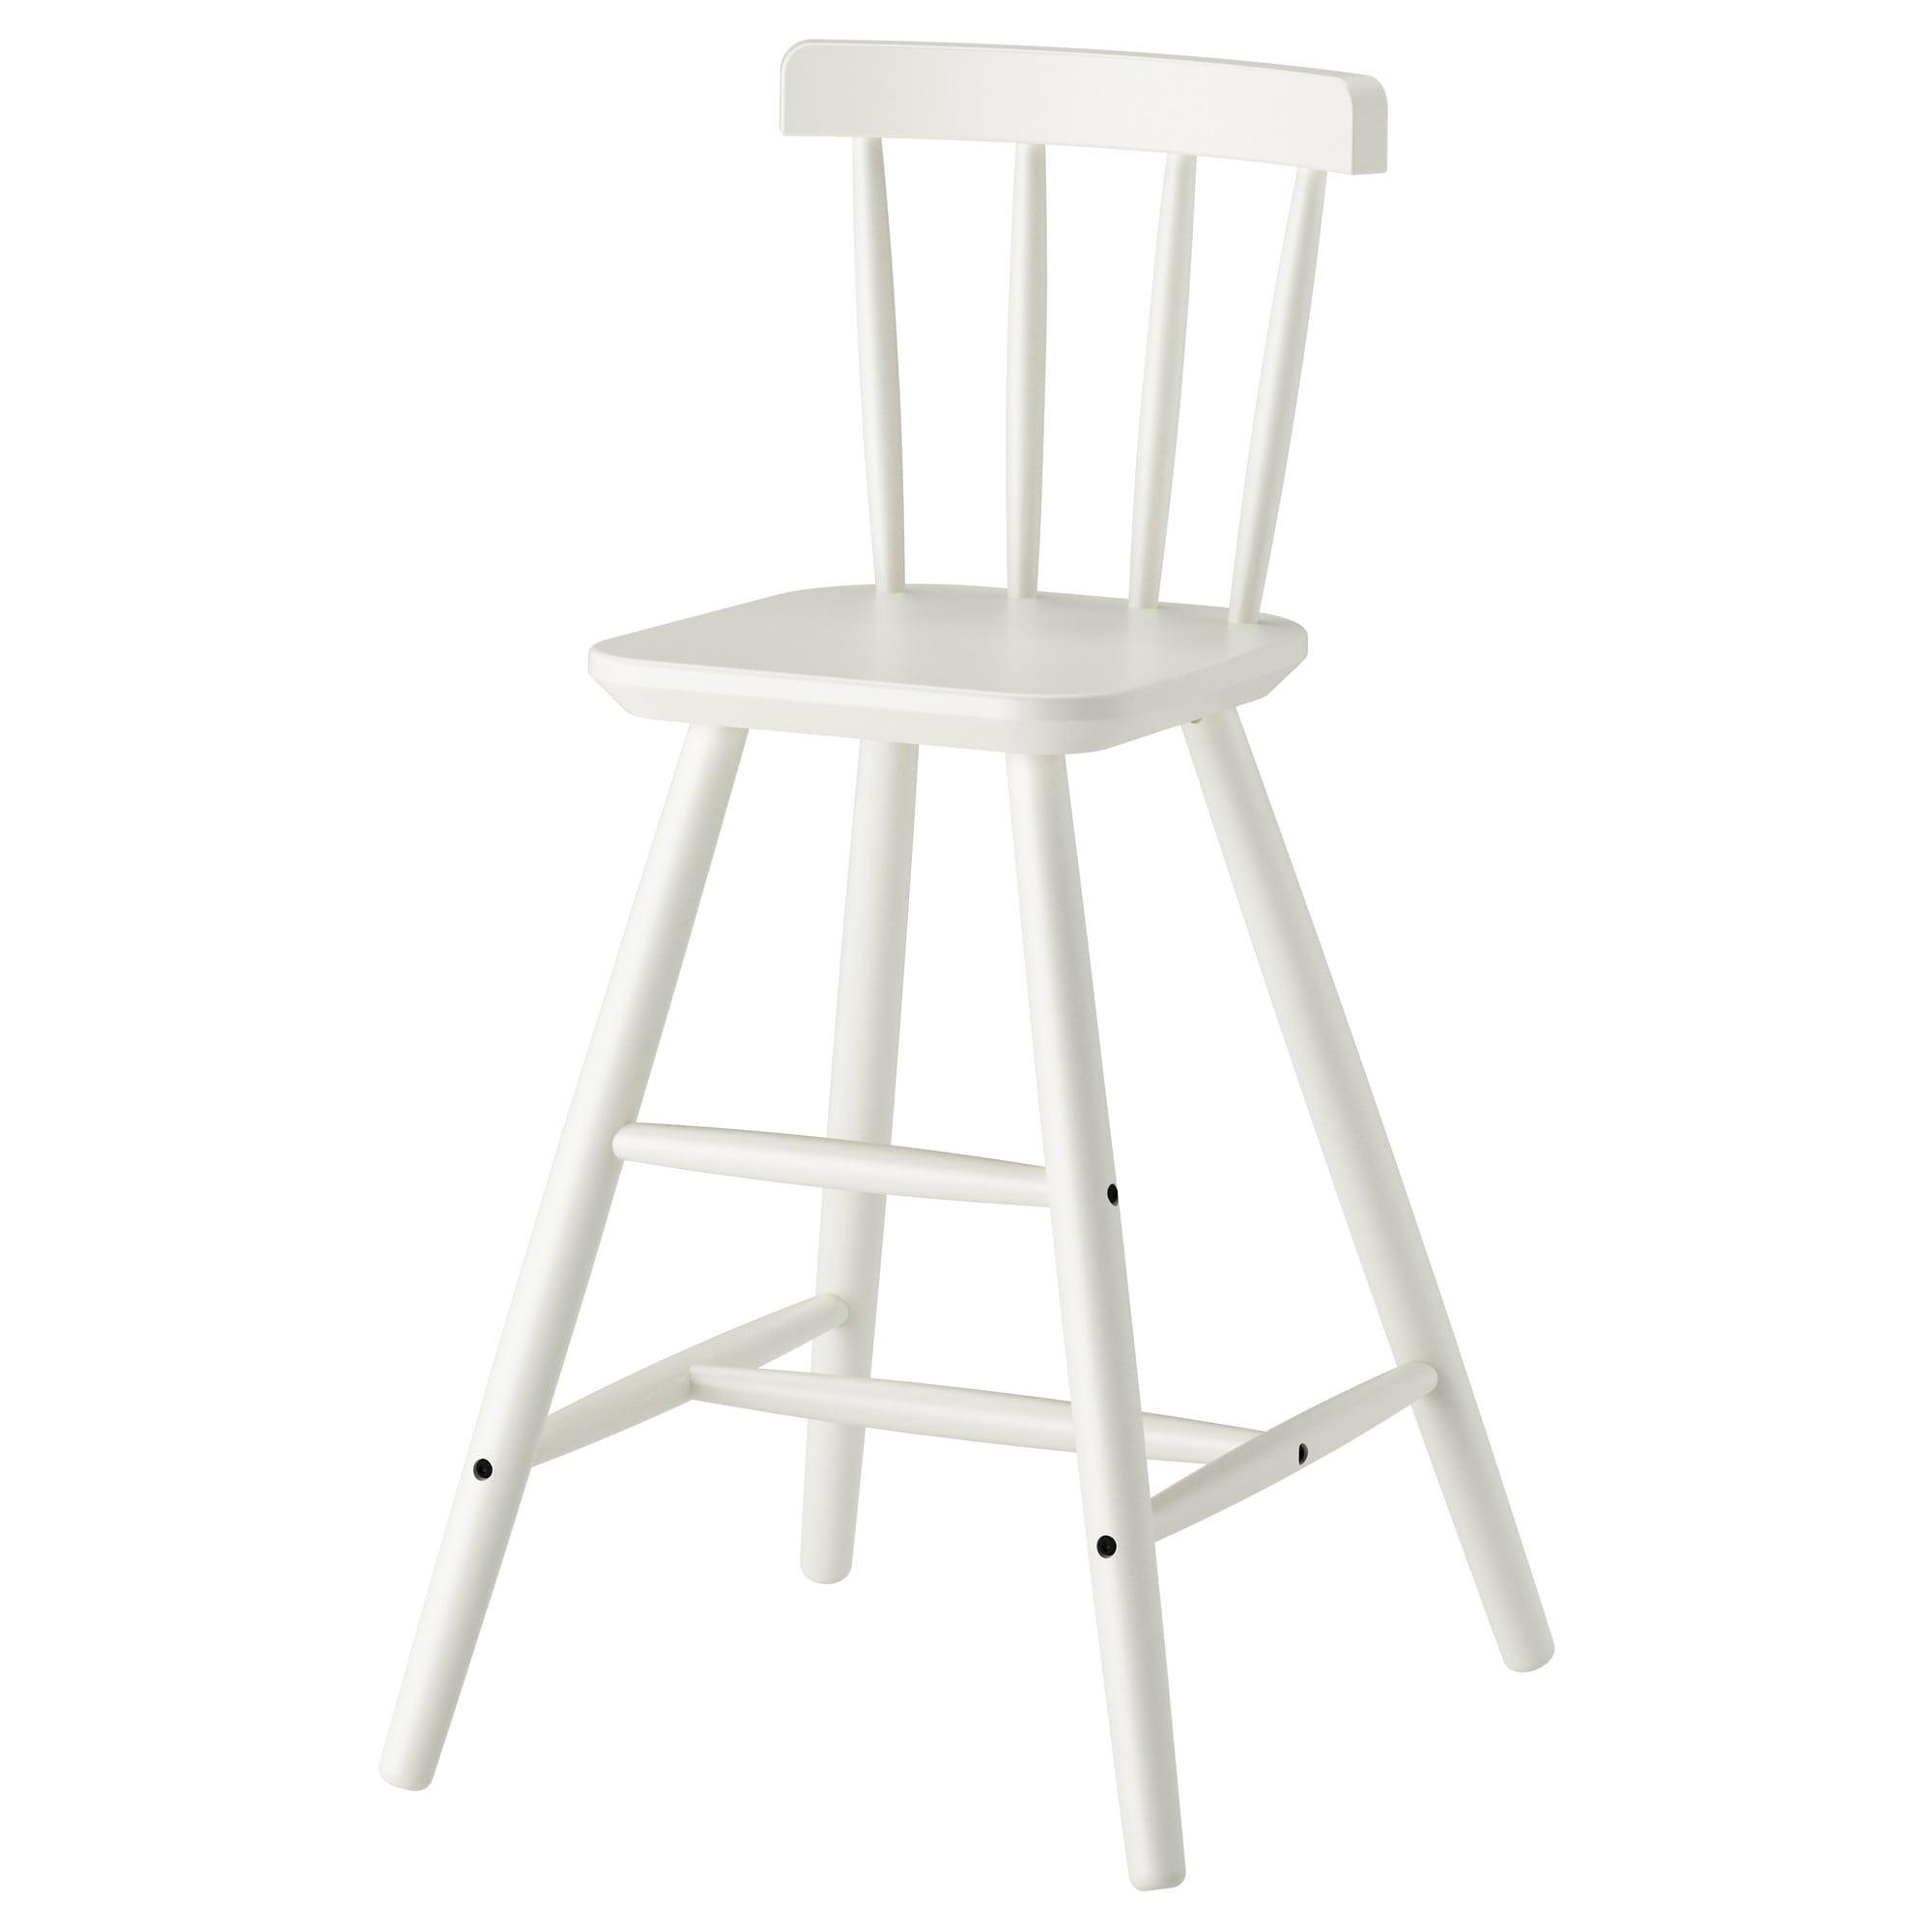 Ikea колесики для стула